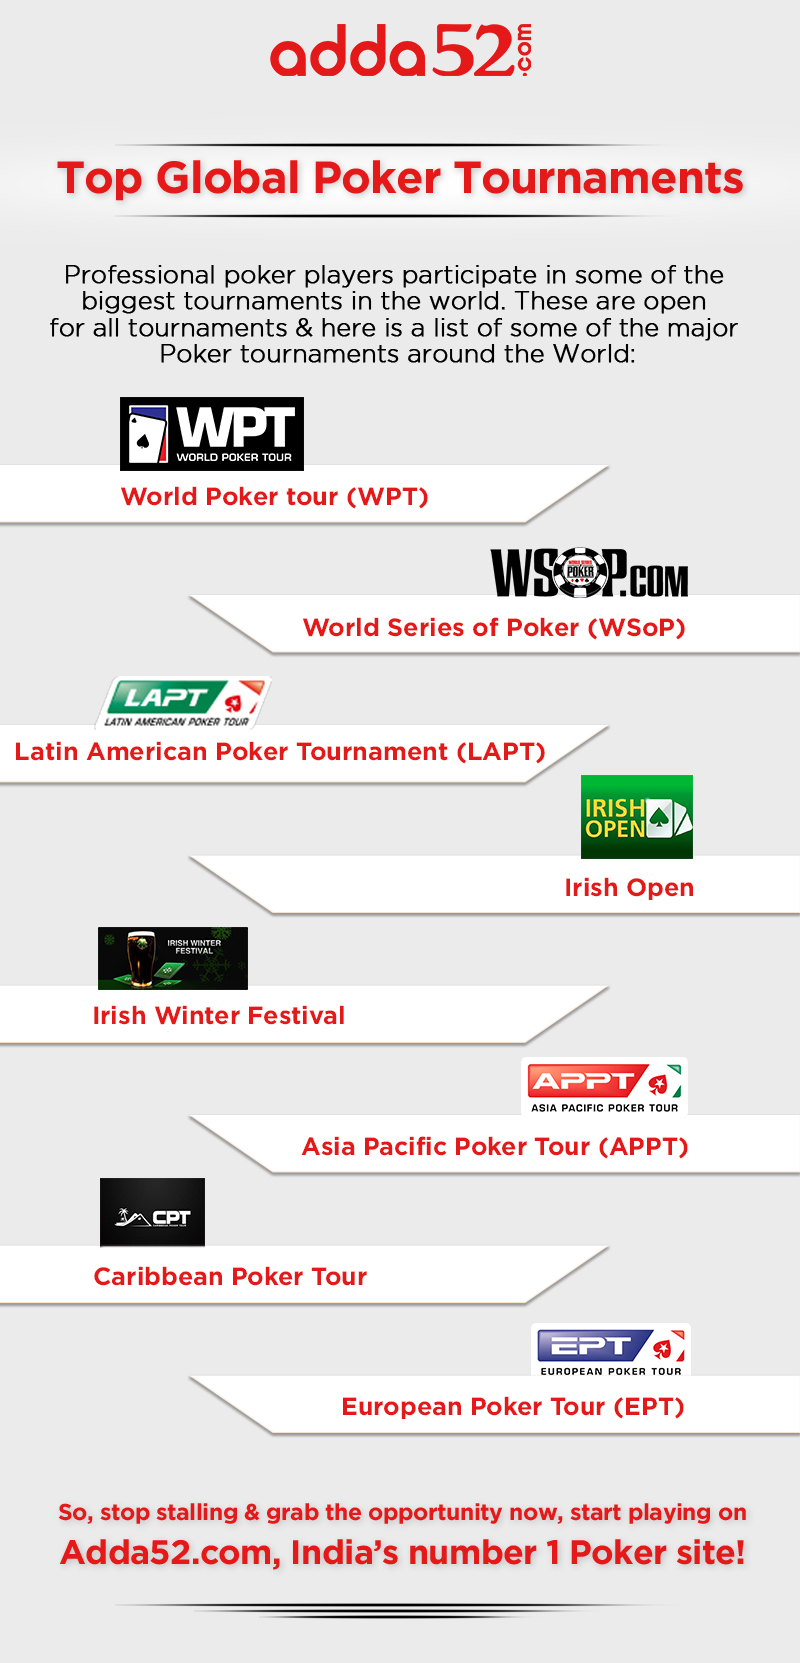 Top Global Poker Tournaments